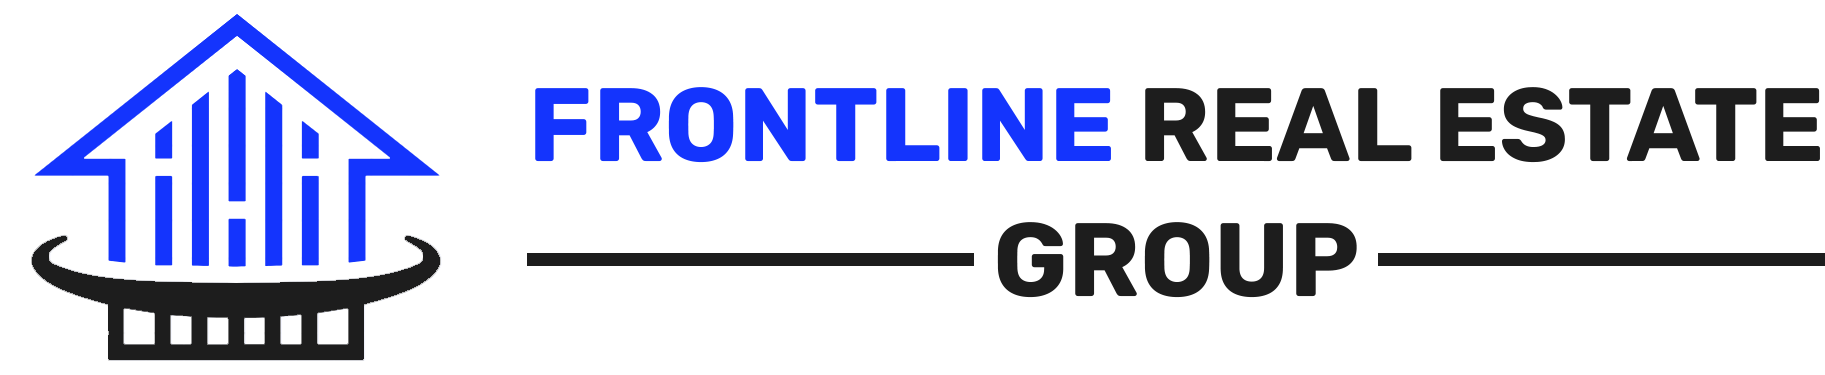 Frontline real estate logo